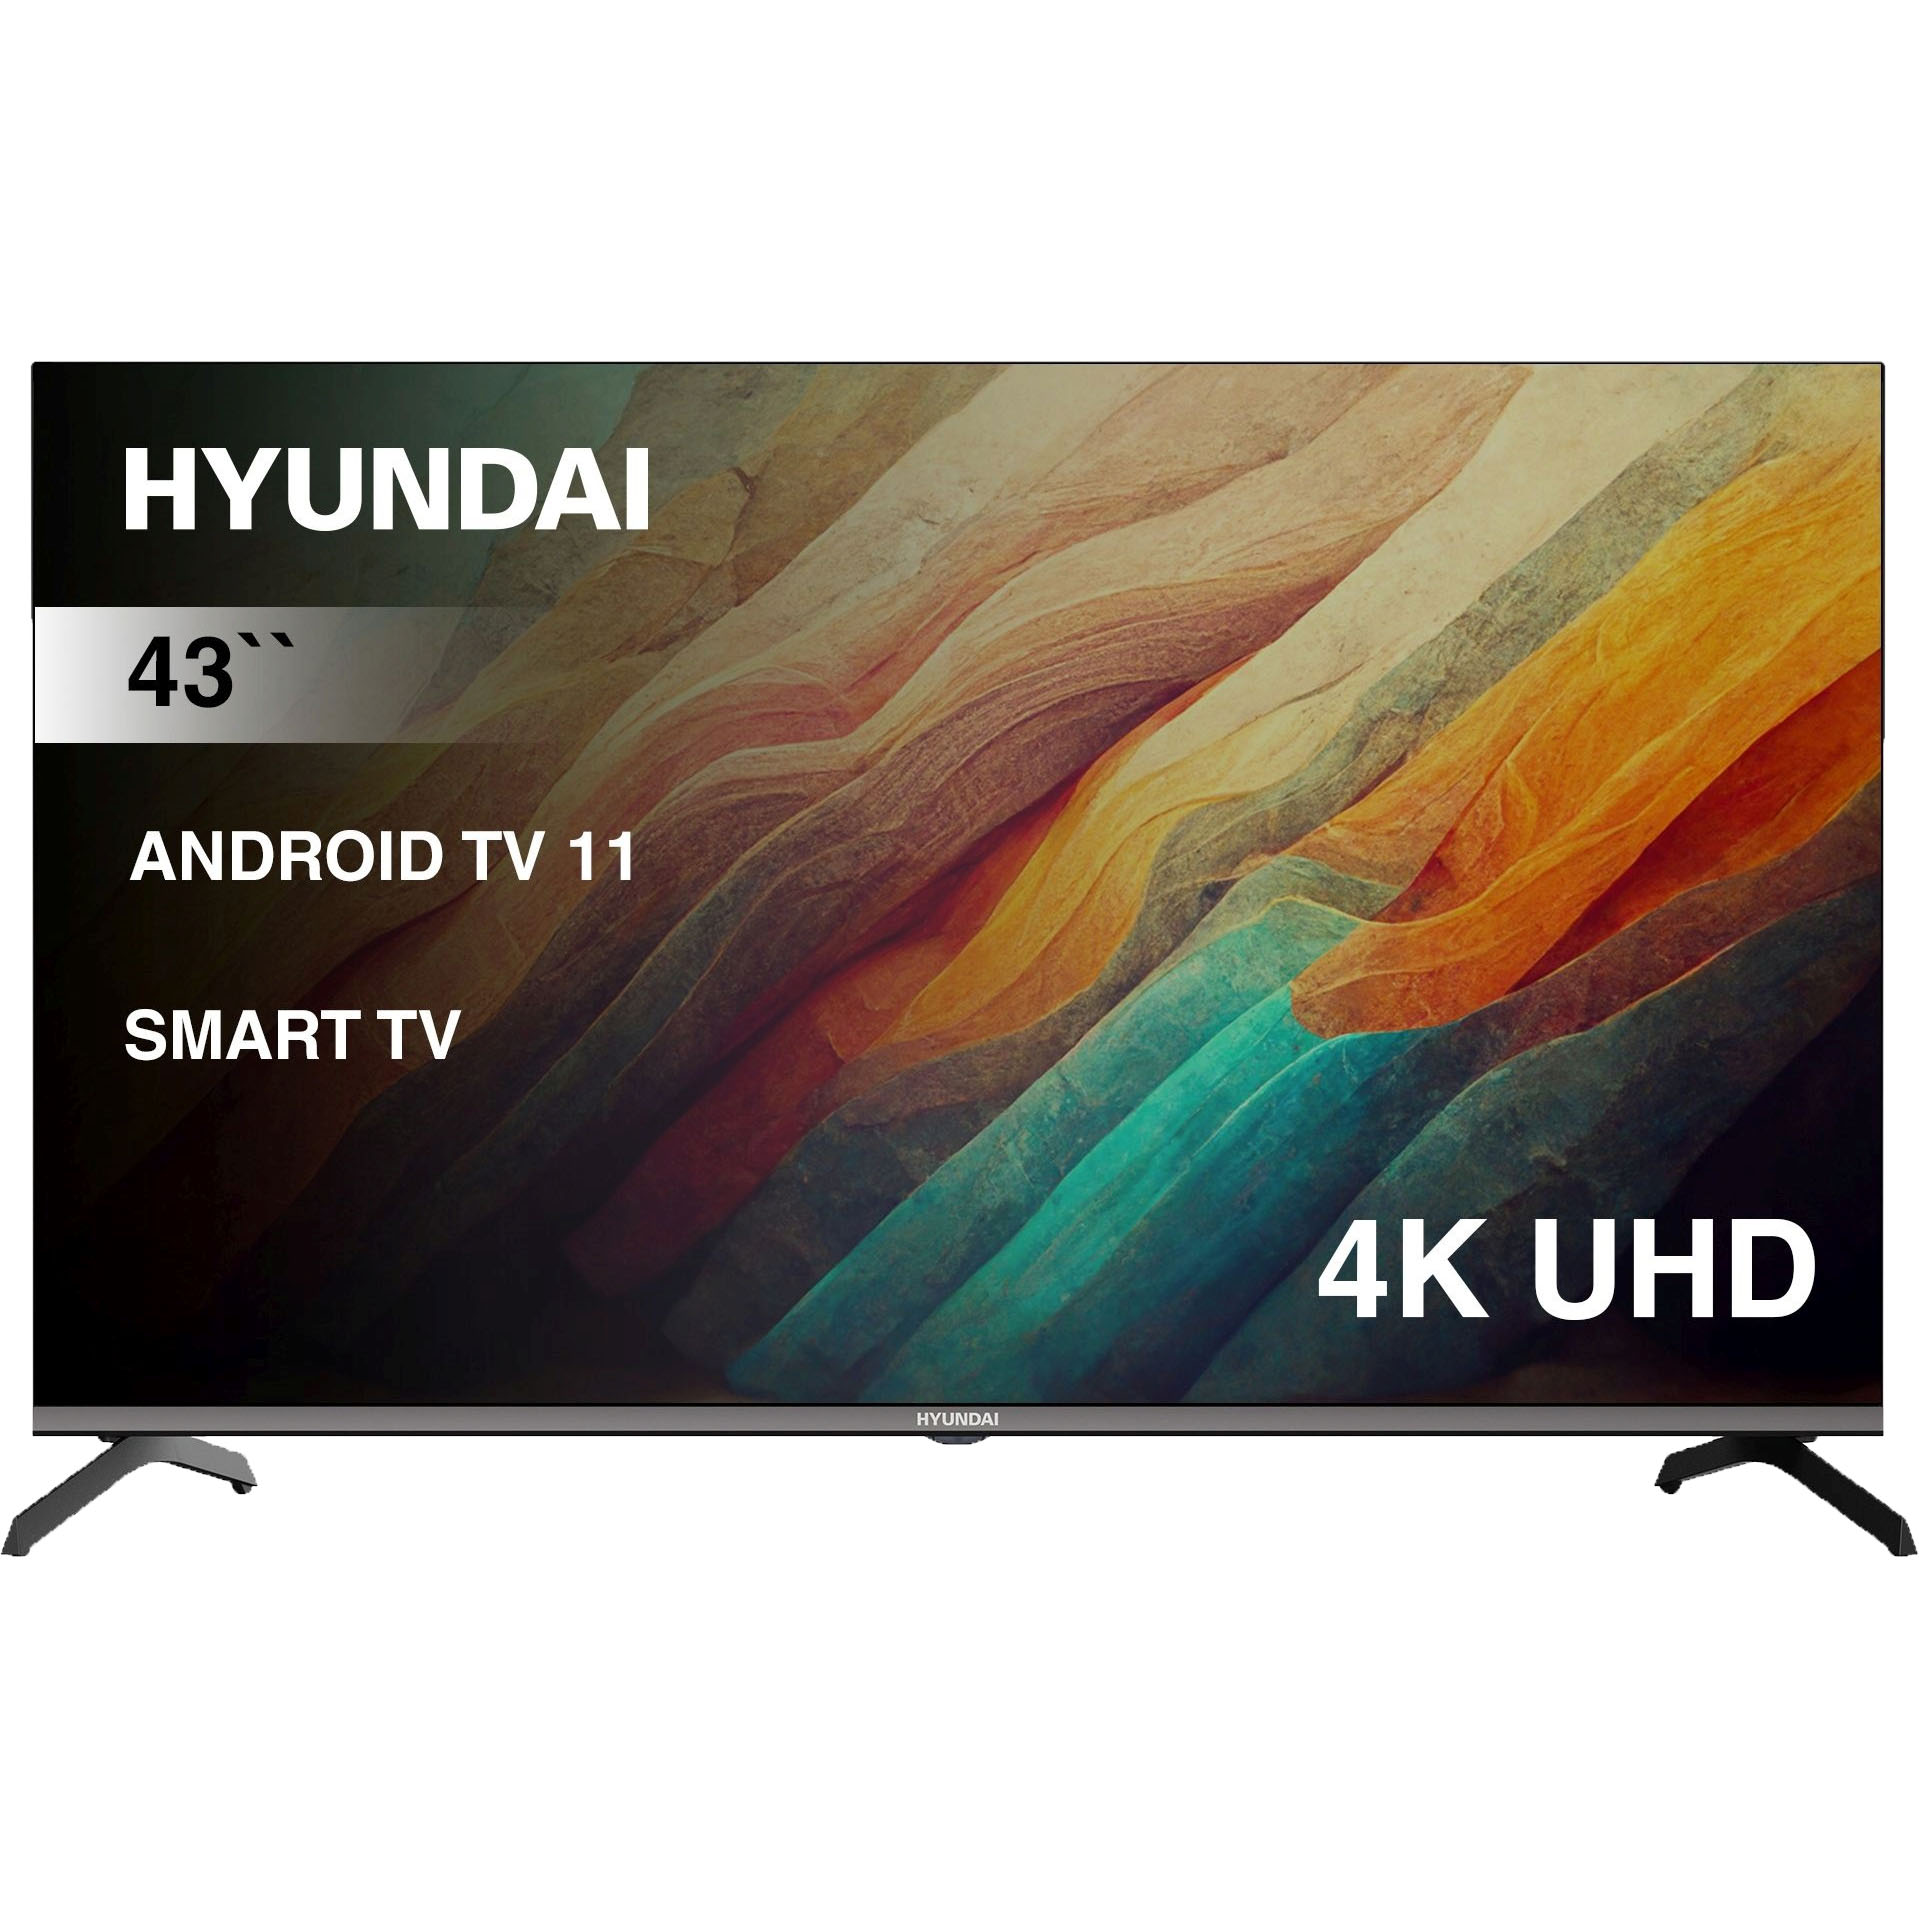 Телевизор Hyundai 43 H-LED43BU7006 телевизор hyundai android tv h led43bu7006 43 led 4k ultra hd android tv черный